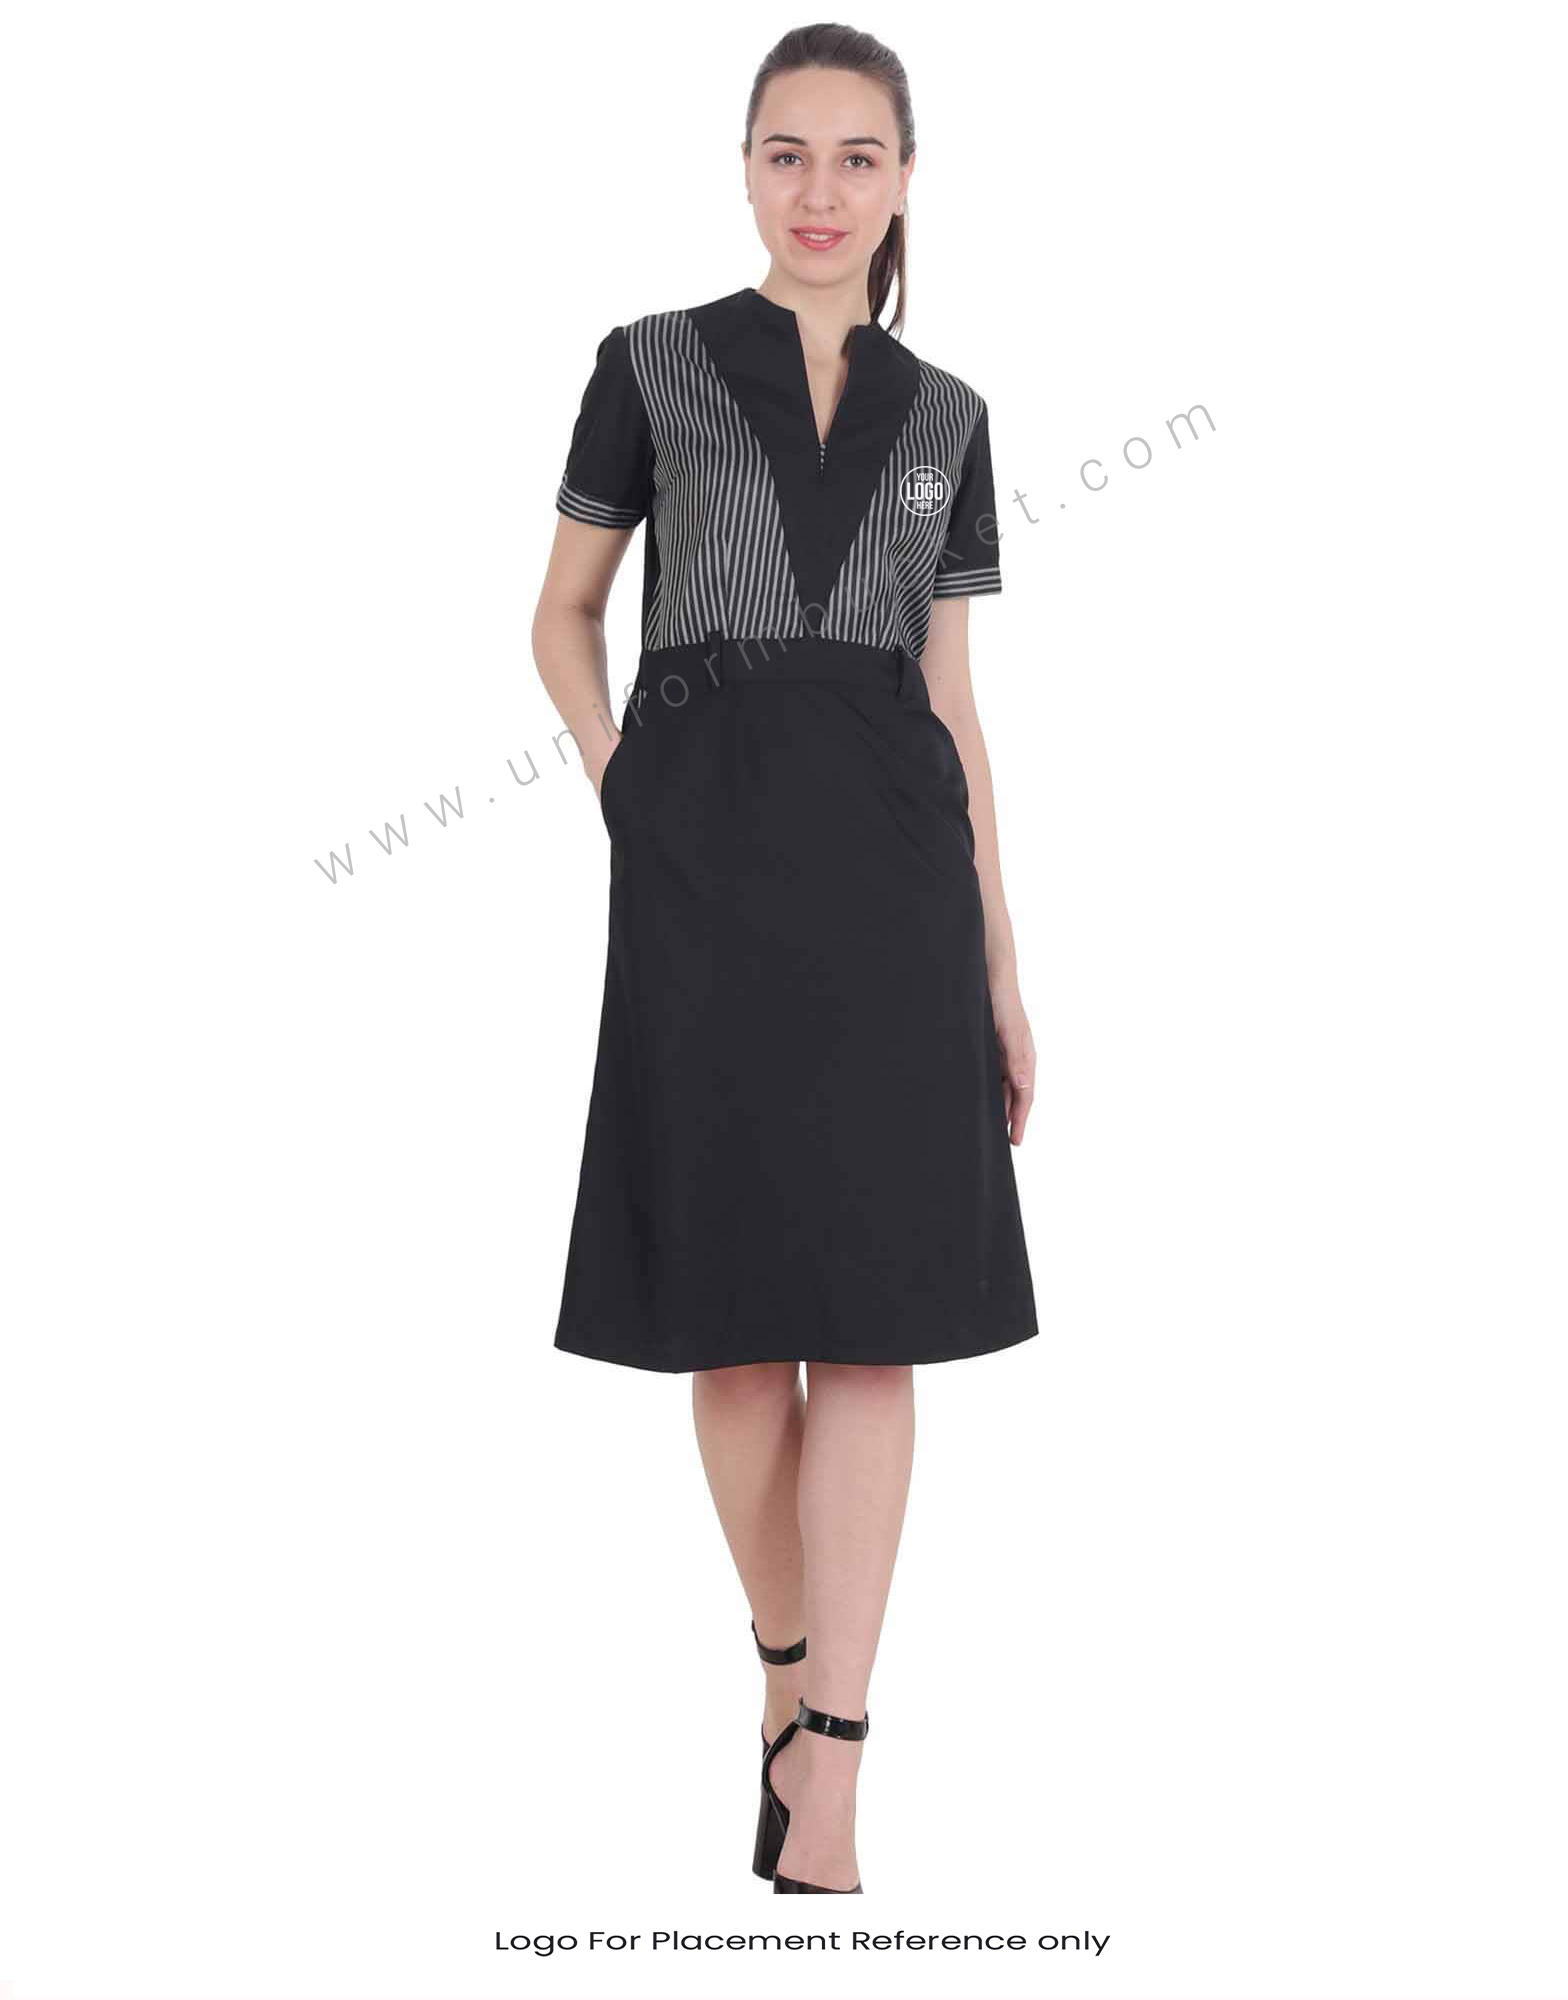 Formal Black Stylish Dress With Zebra Pattern